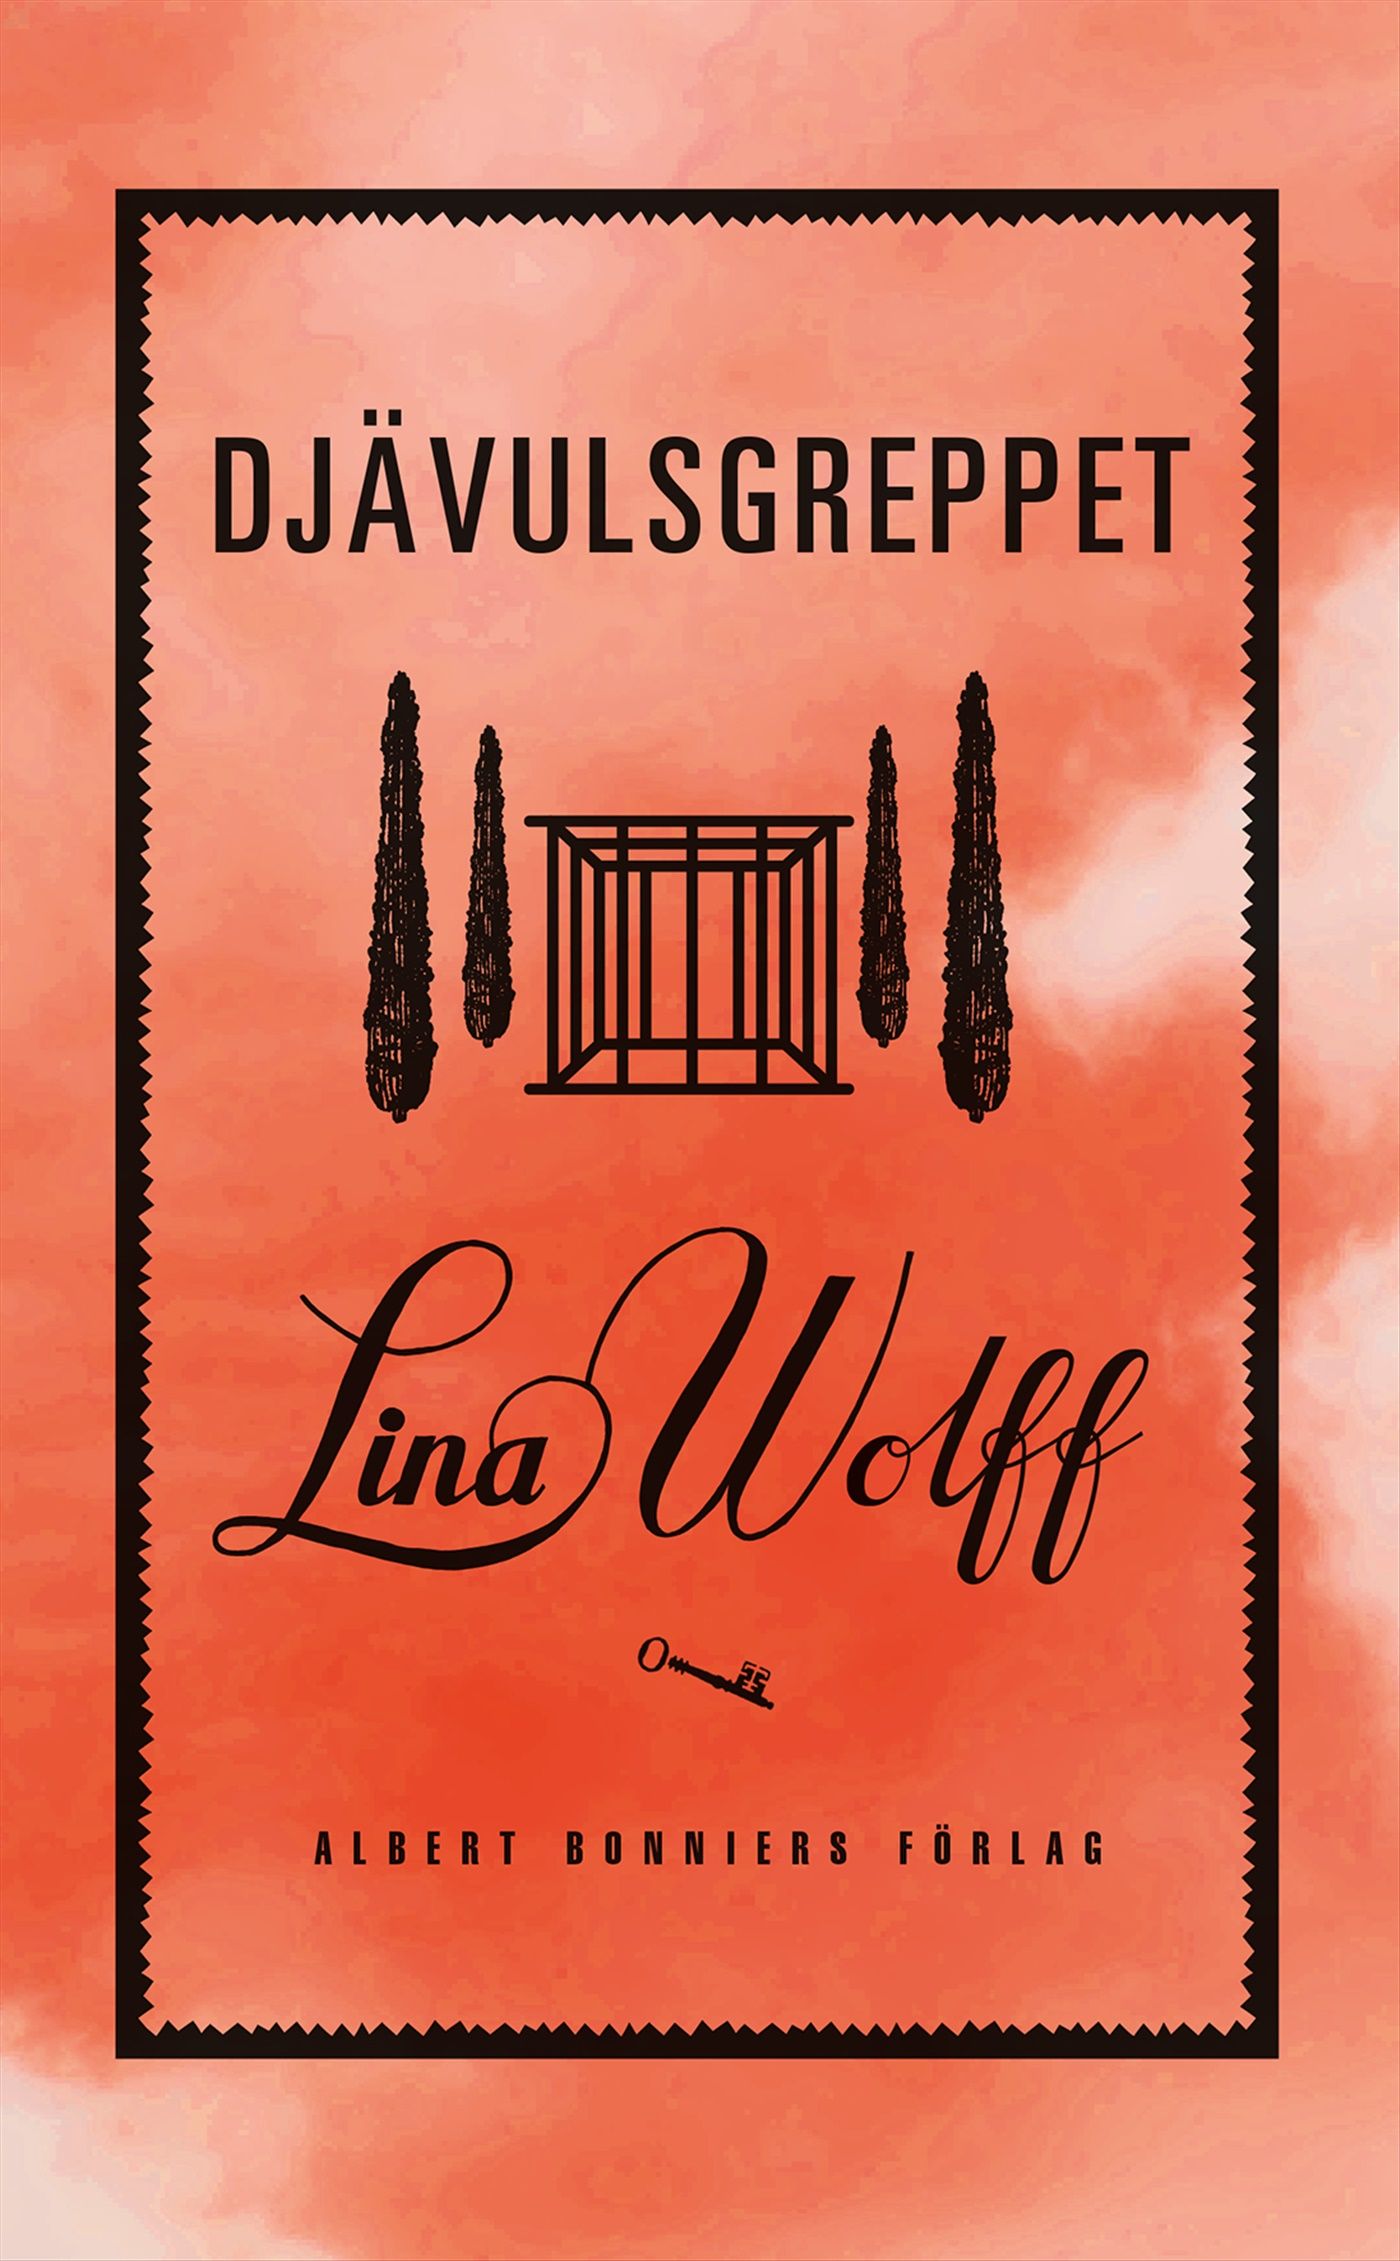 Djävulsgreppet, e-bok av Lina Wolff